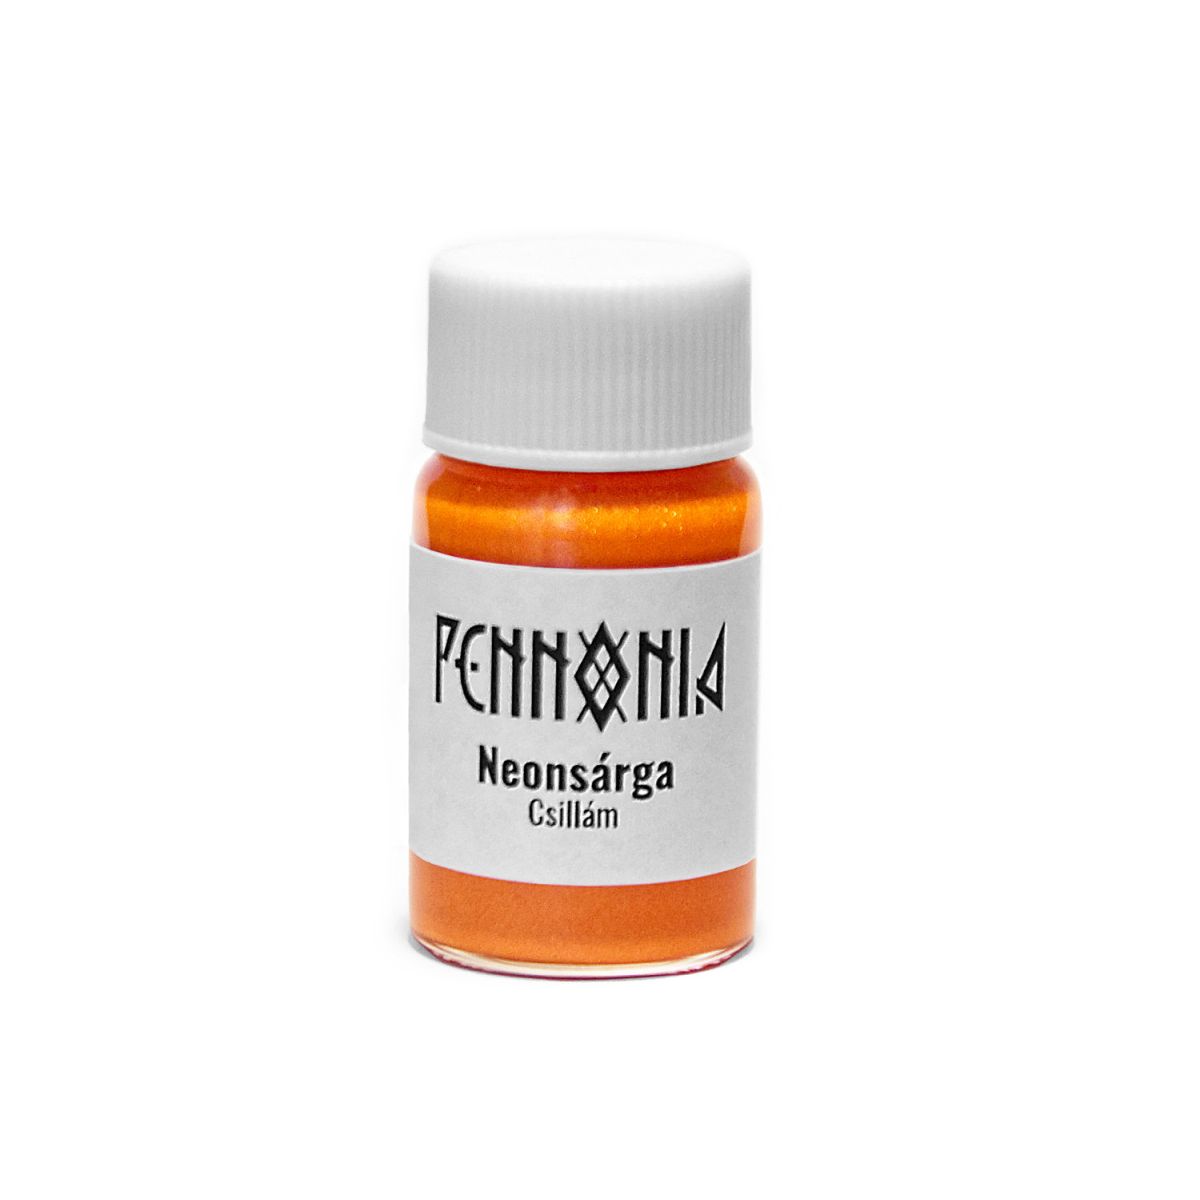 Pennonia shimmer additive - Neonsarga